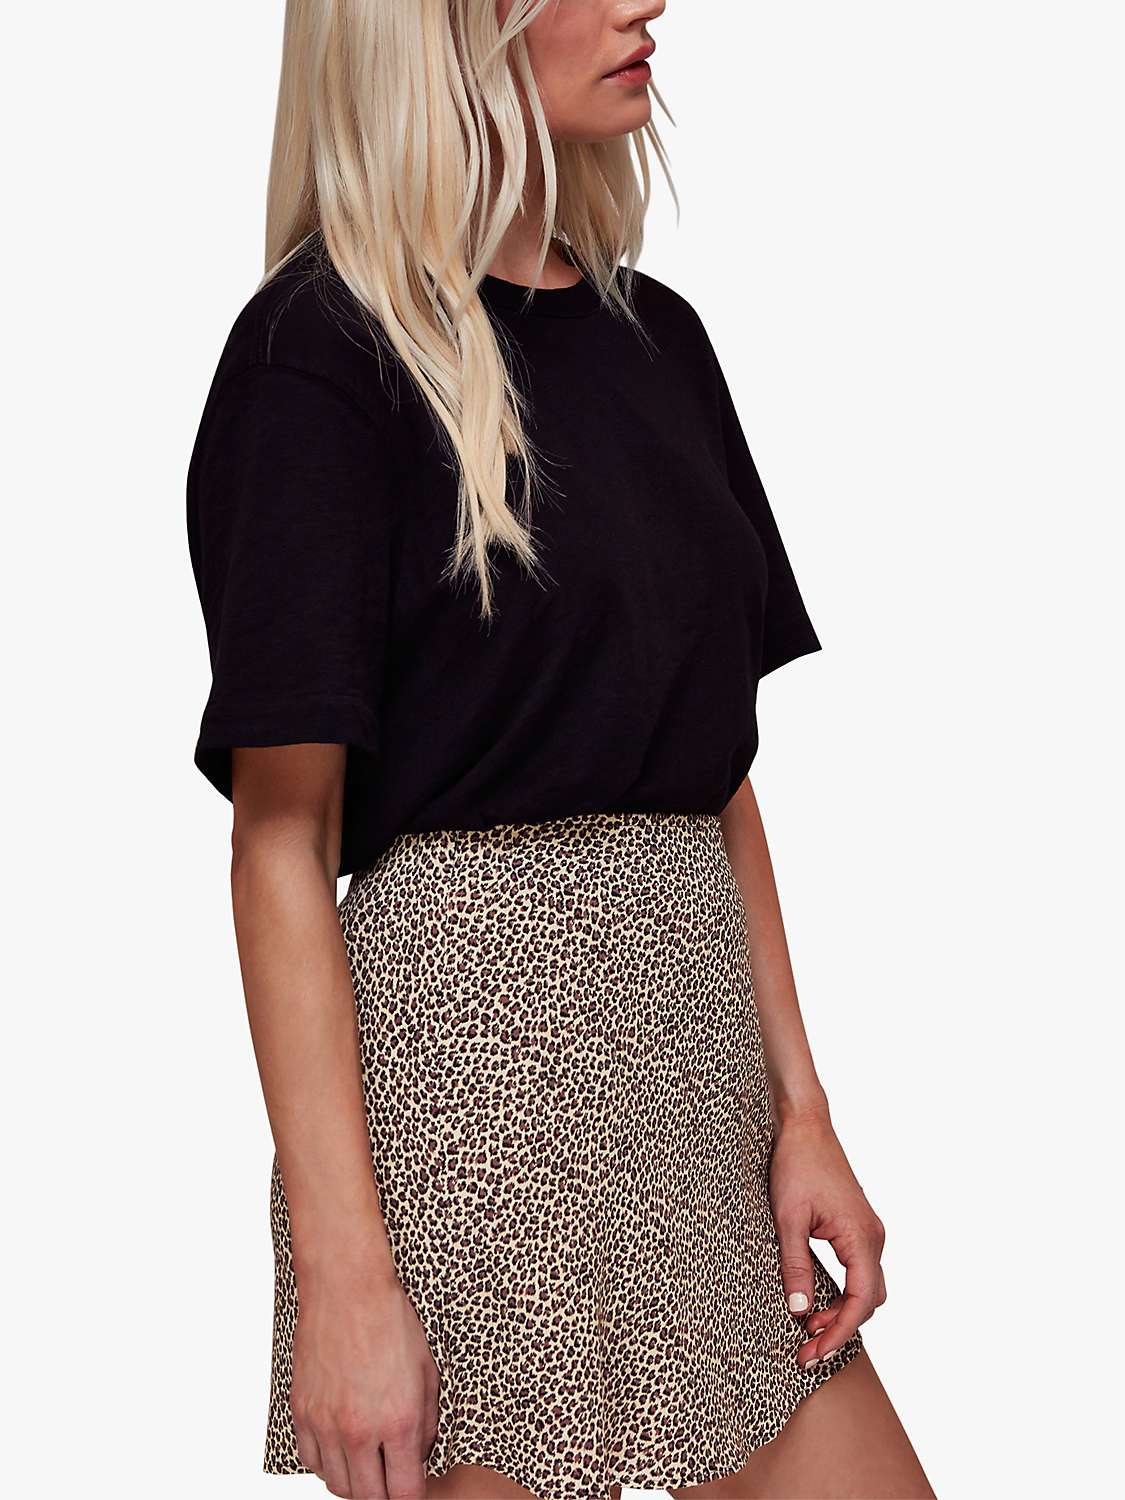 Buy Whistles Petite Dashed Leopard Print Mini Skirt, Brown/Multi Online at johnlewis.com